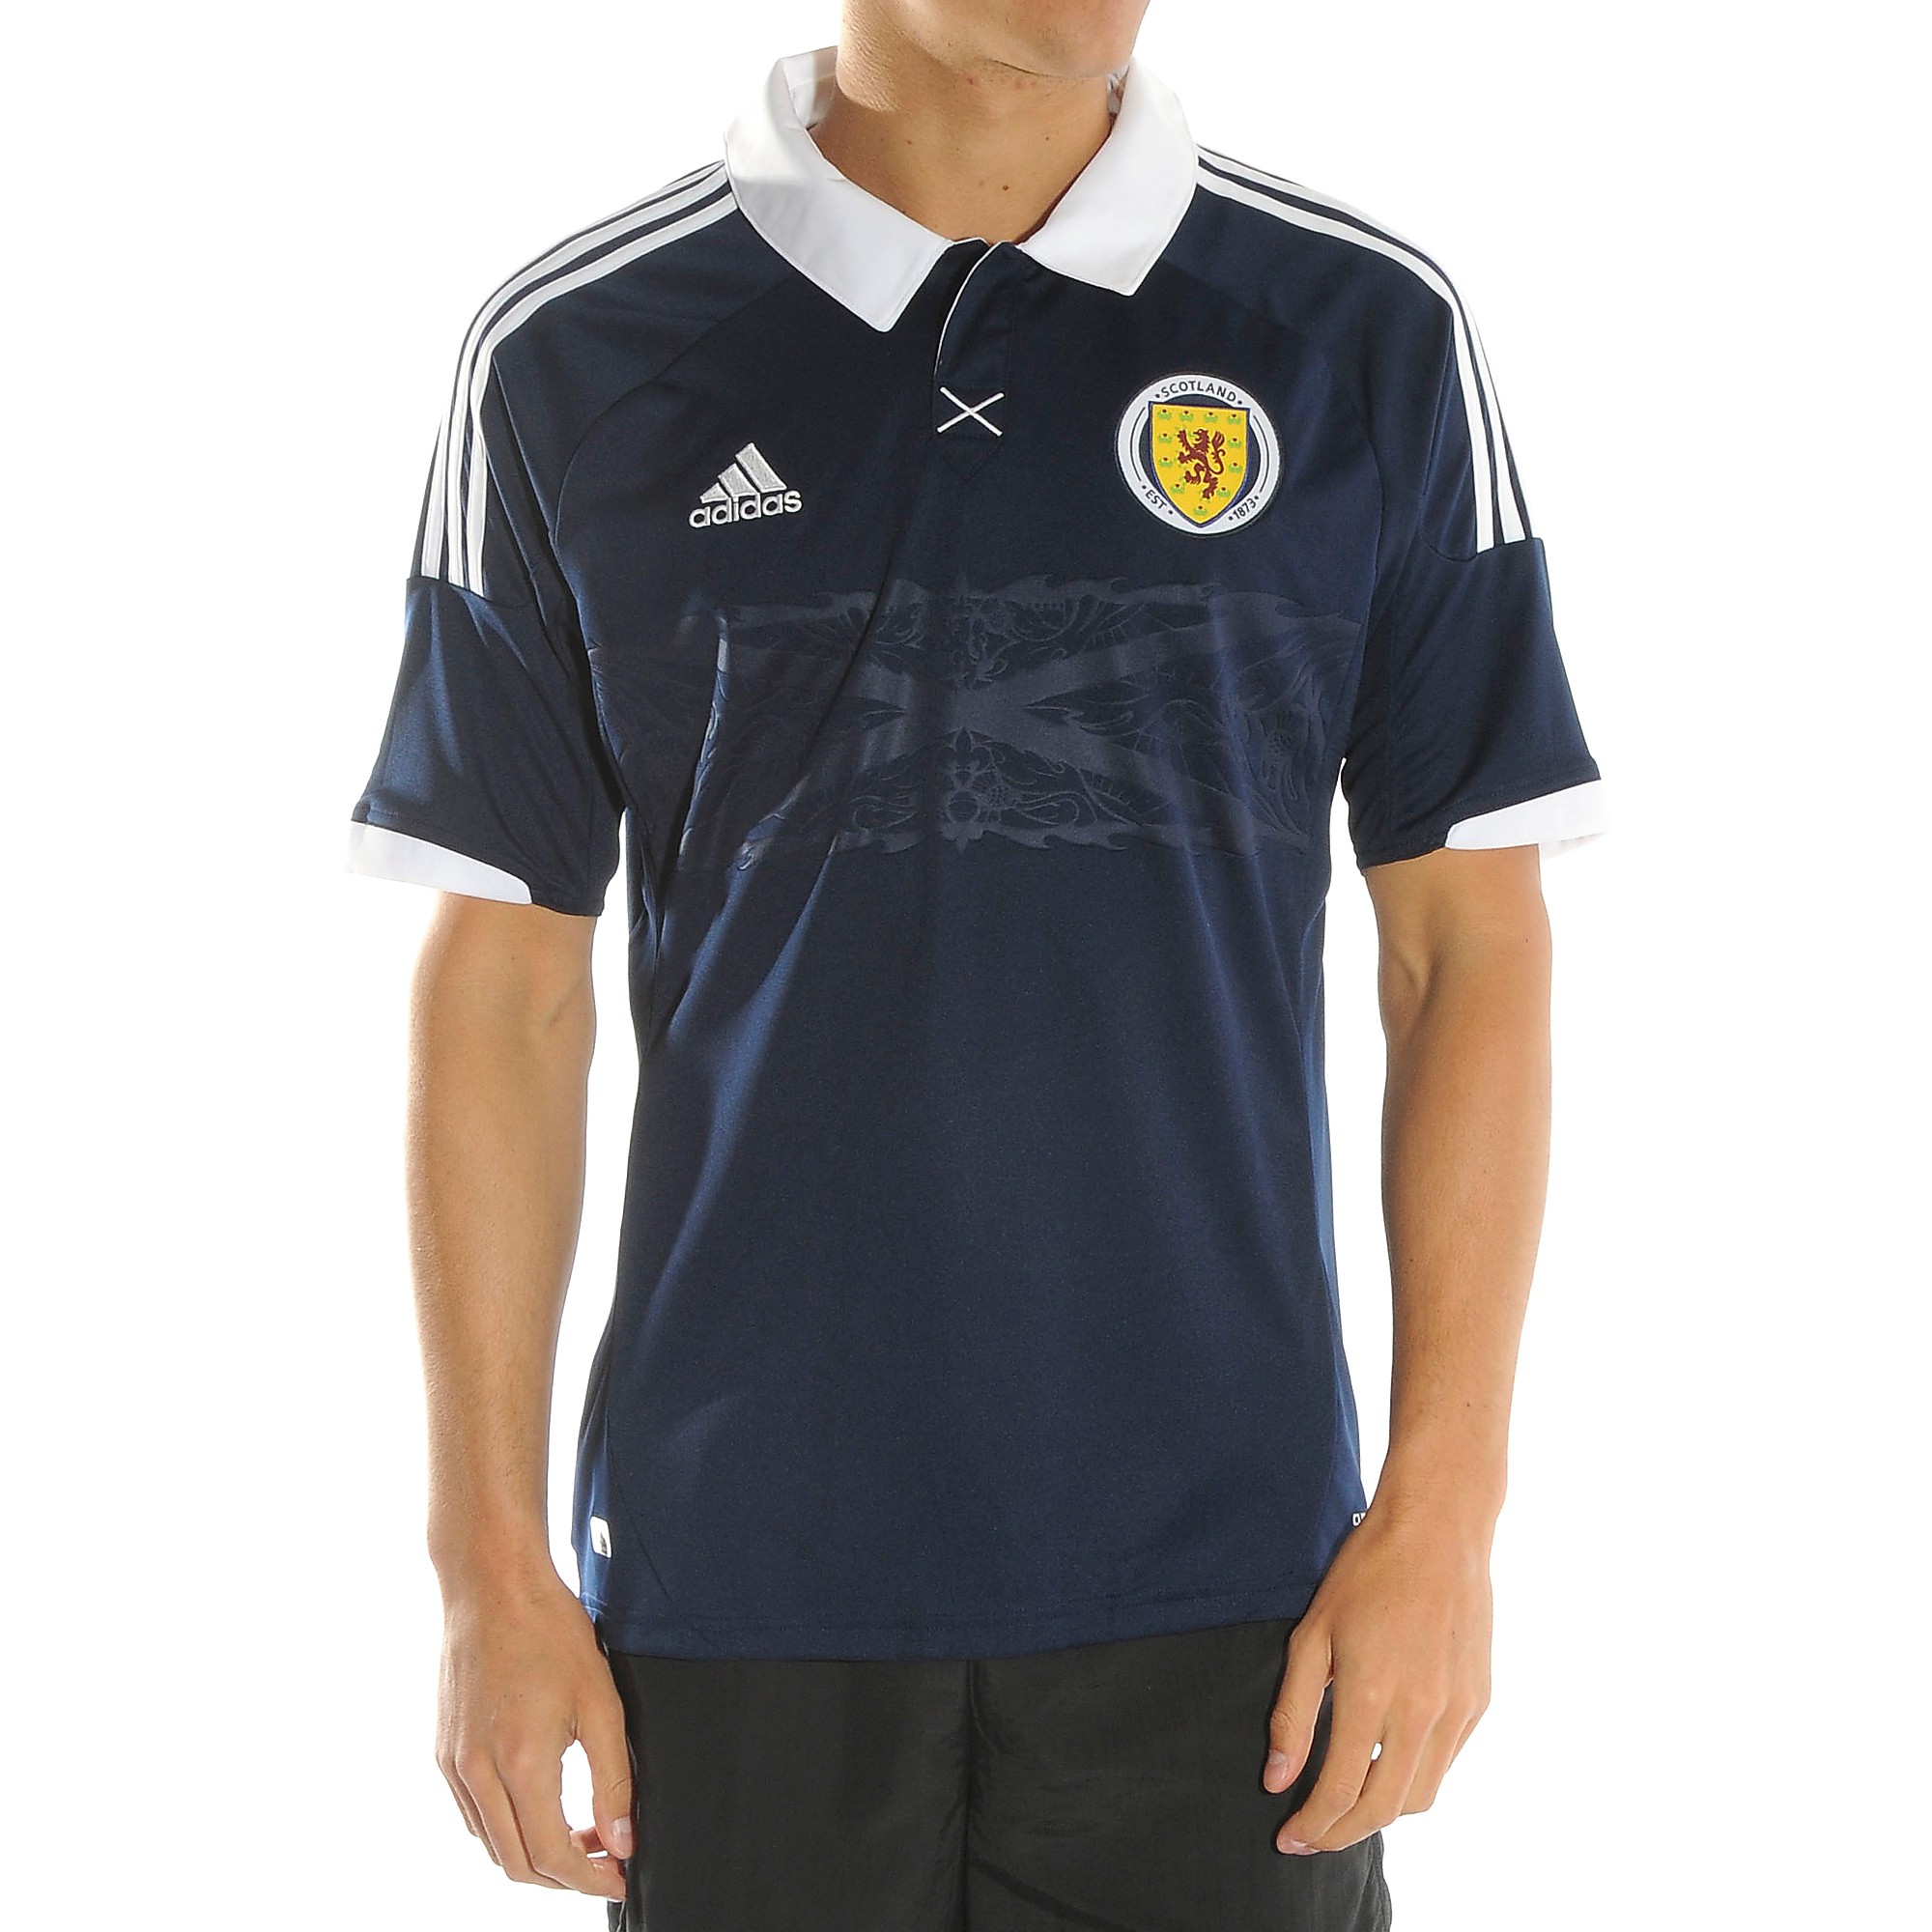 Buy your Scotland football shirt (Home & Away Kits)